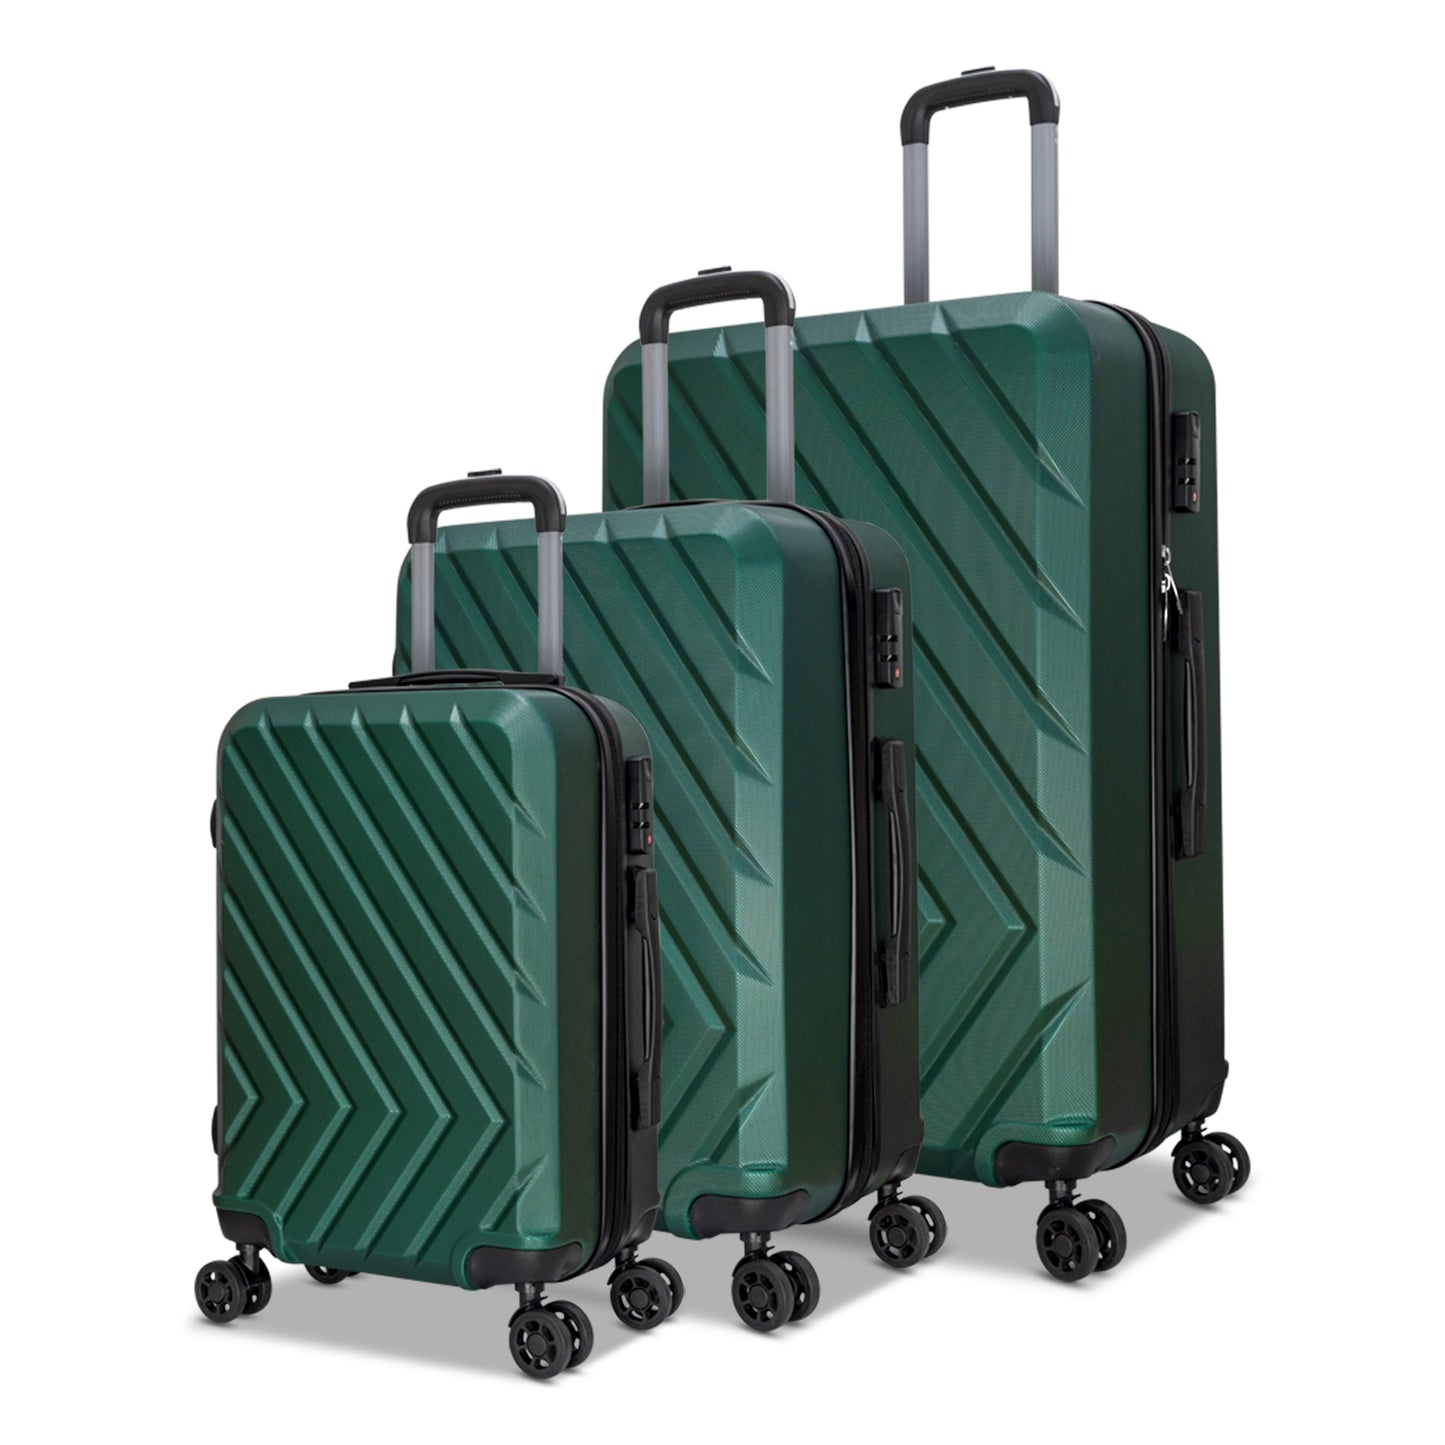 3 piece Luggage Set Highlander Collection